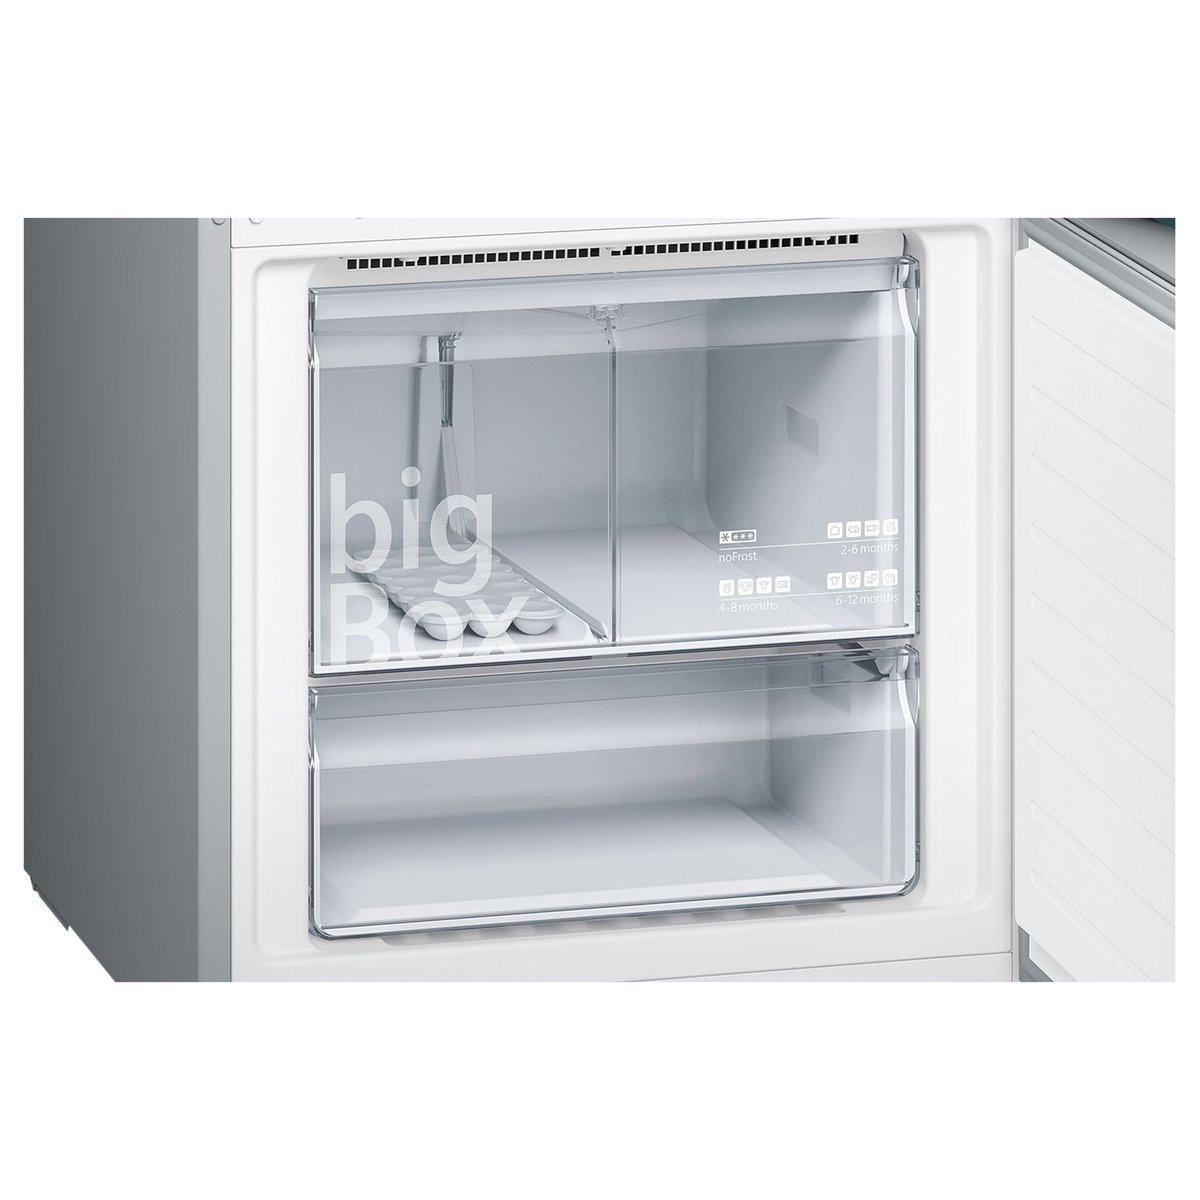 Siemens Bottom Freezer Refrigerator With Wi-Fi KG56NHi30M 559Ltr